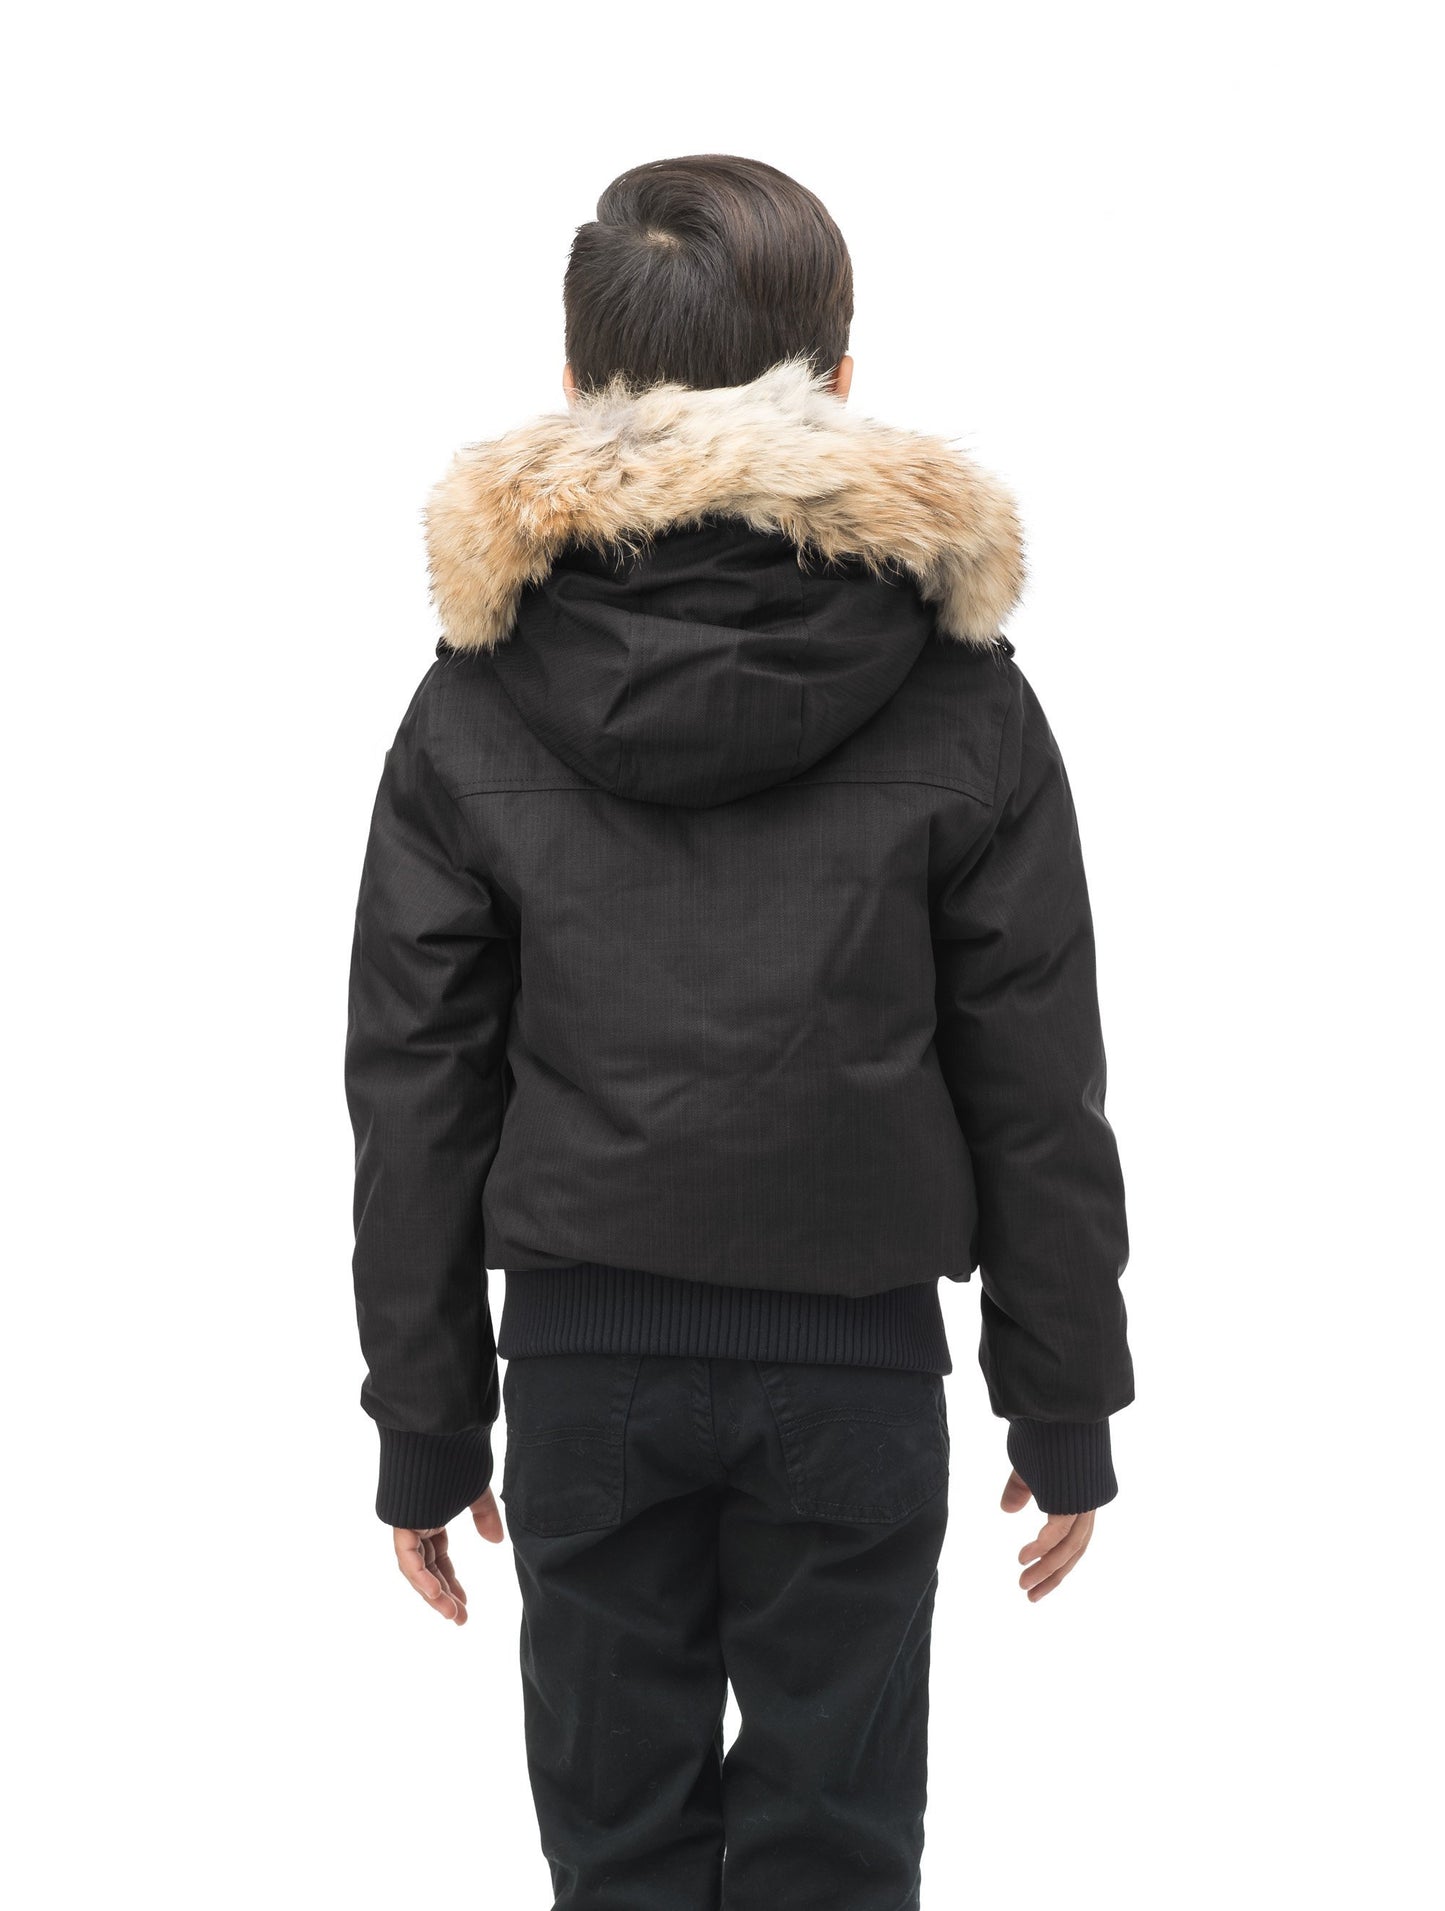 Kid's waist length down bomber jacket with fur trim hood in CH Black